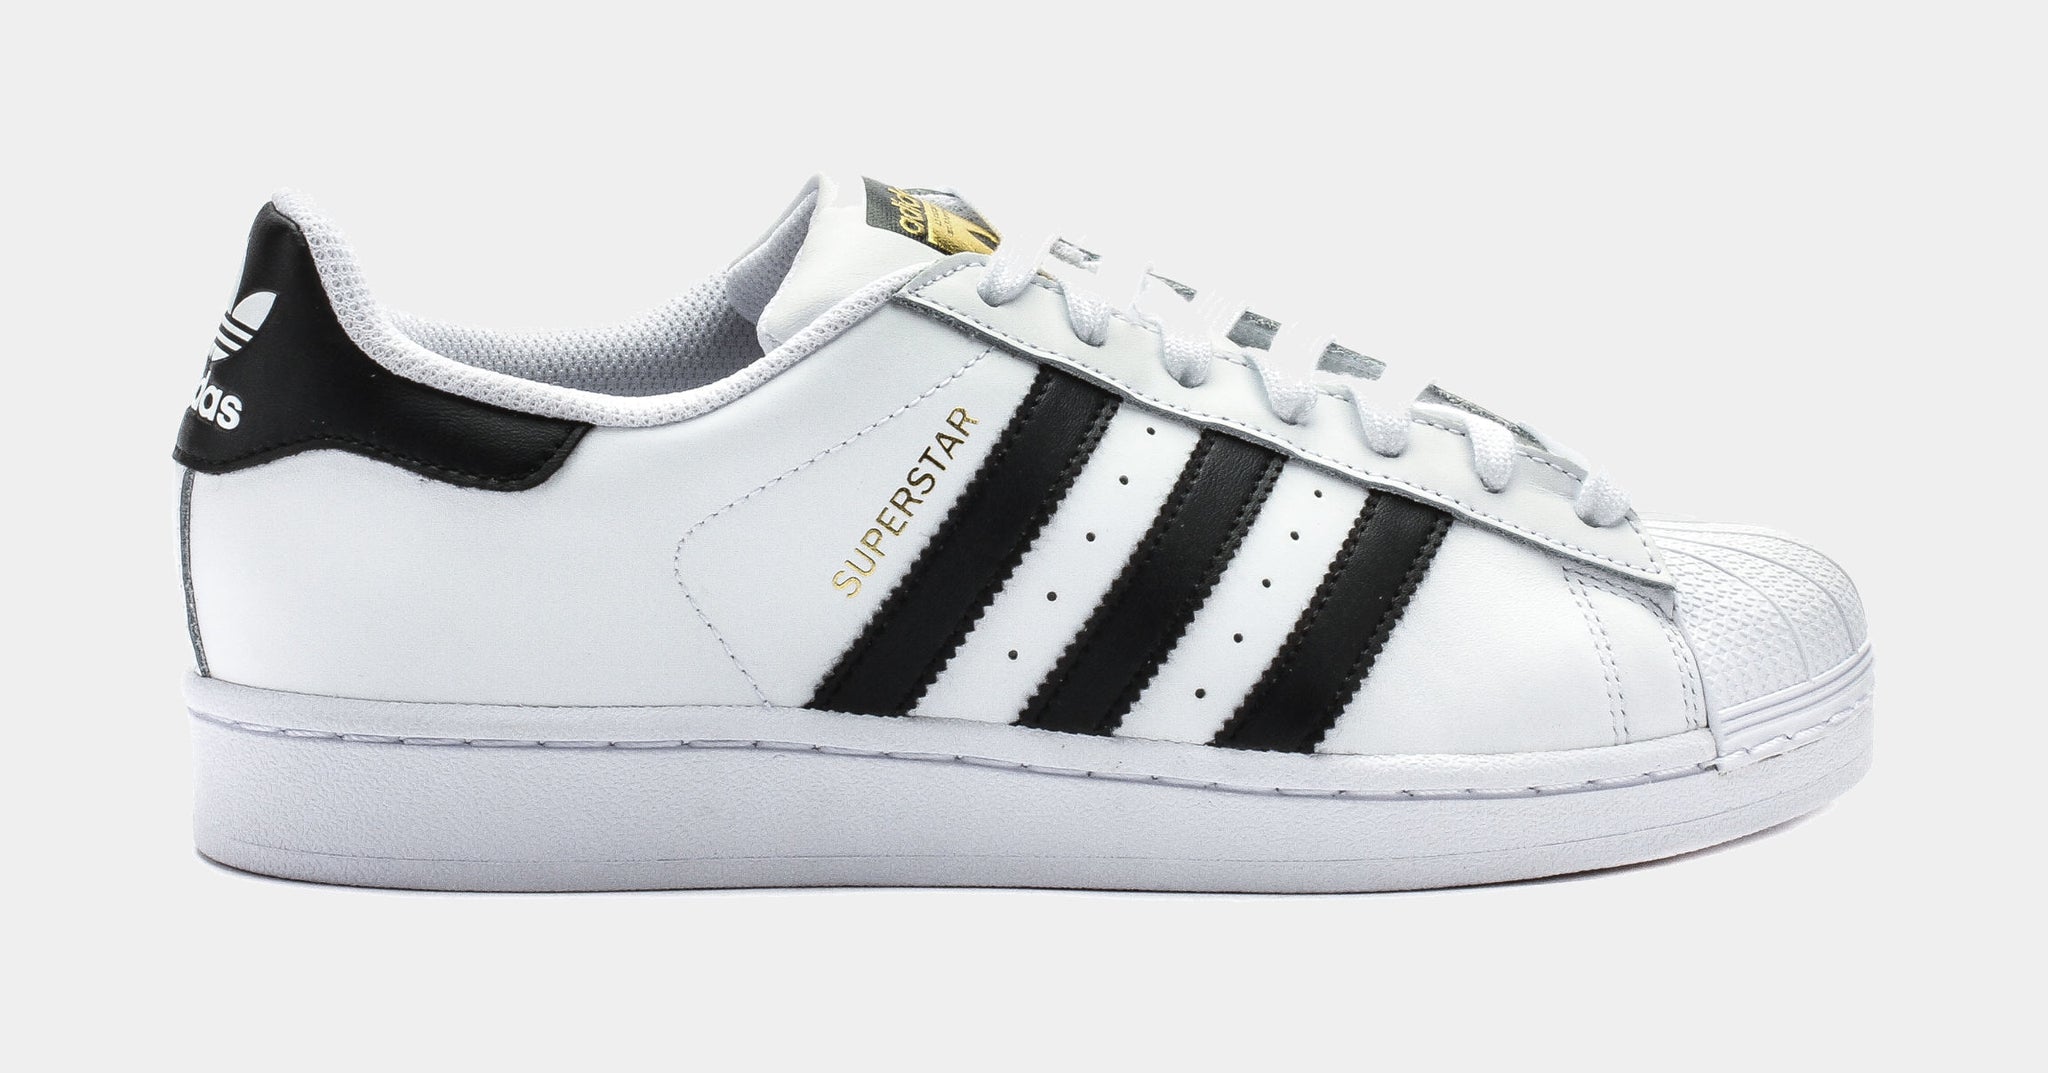 Adidas Men's Originals Superstar Shoes, Running White/Core Black, 10